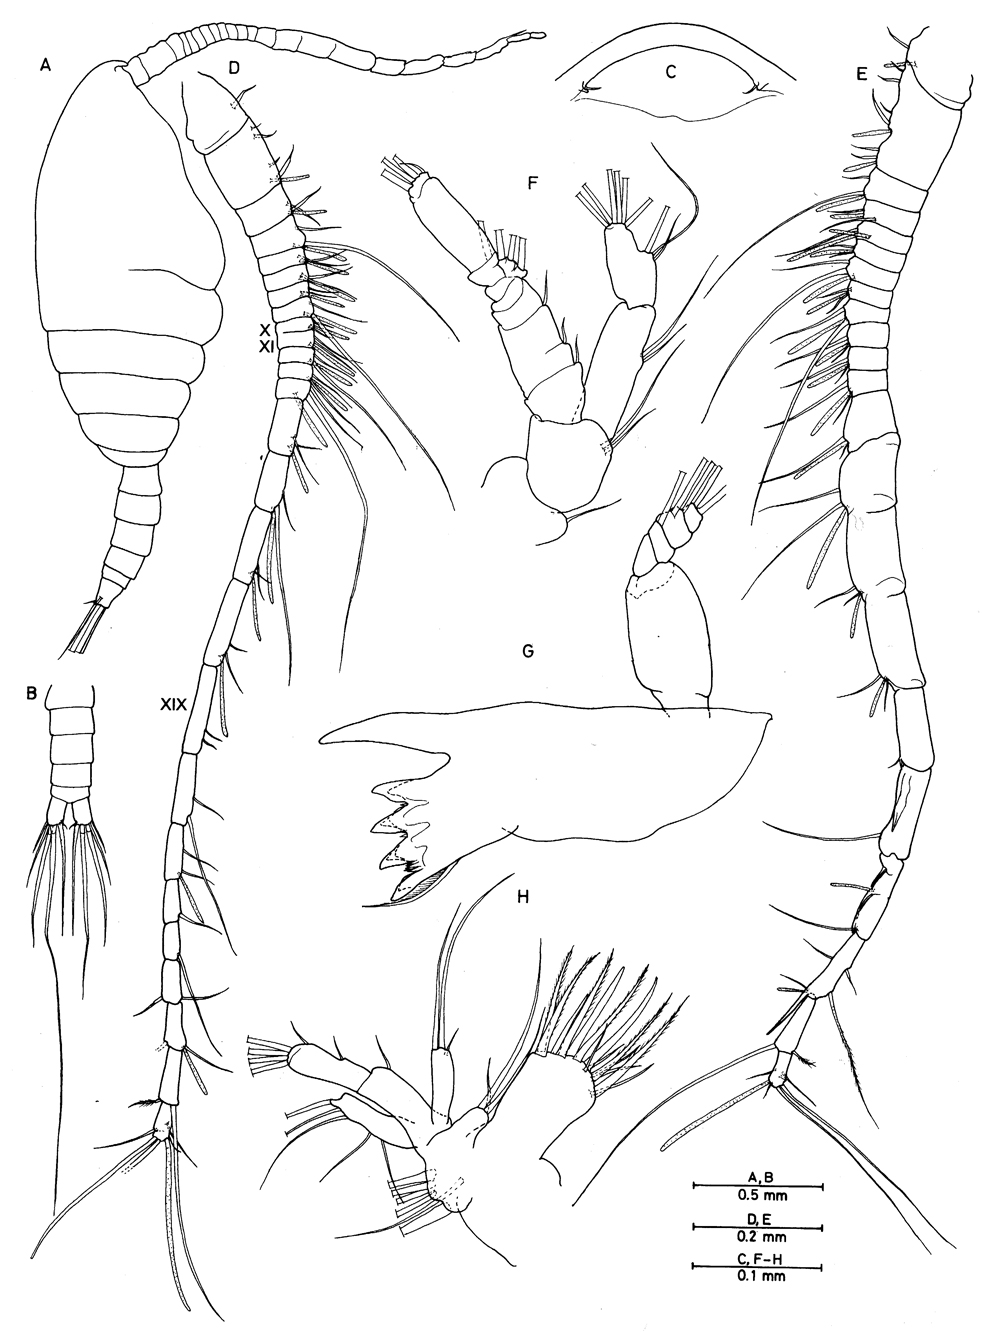 Species Enantronoides bahamensis - Plate 1 of morphological figures